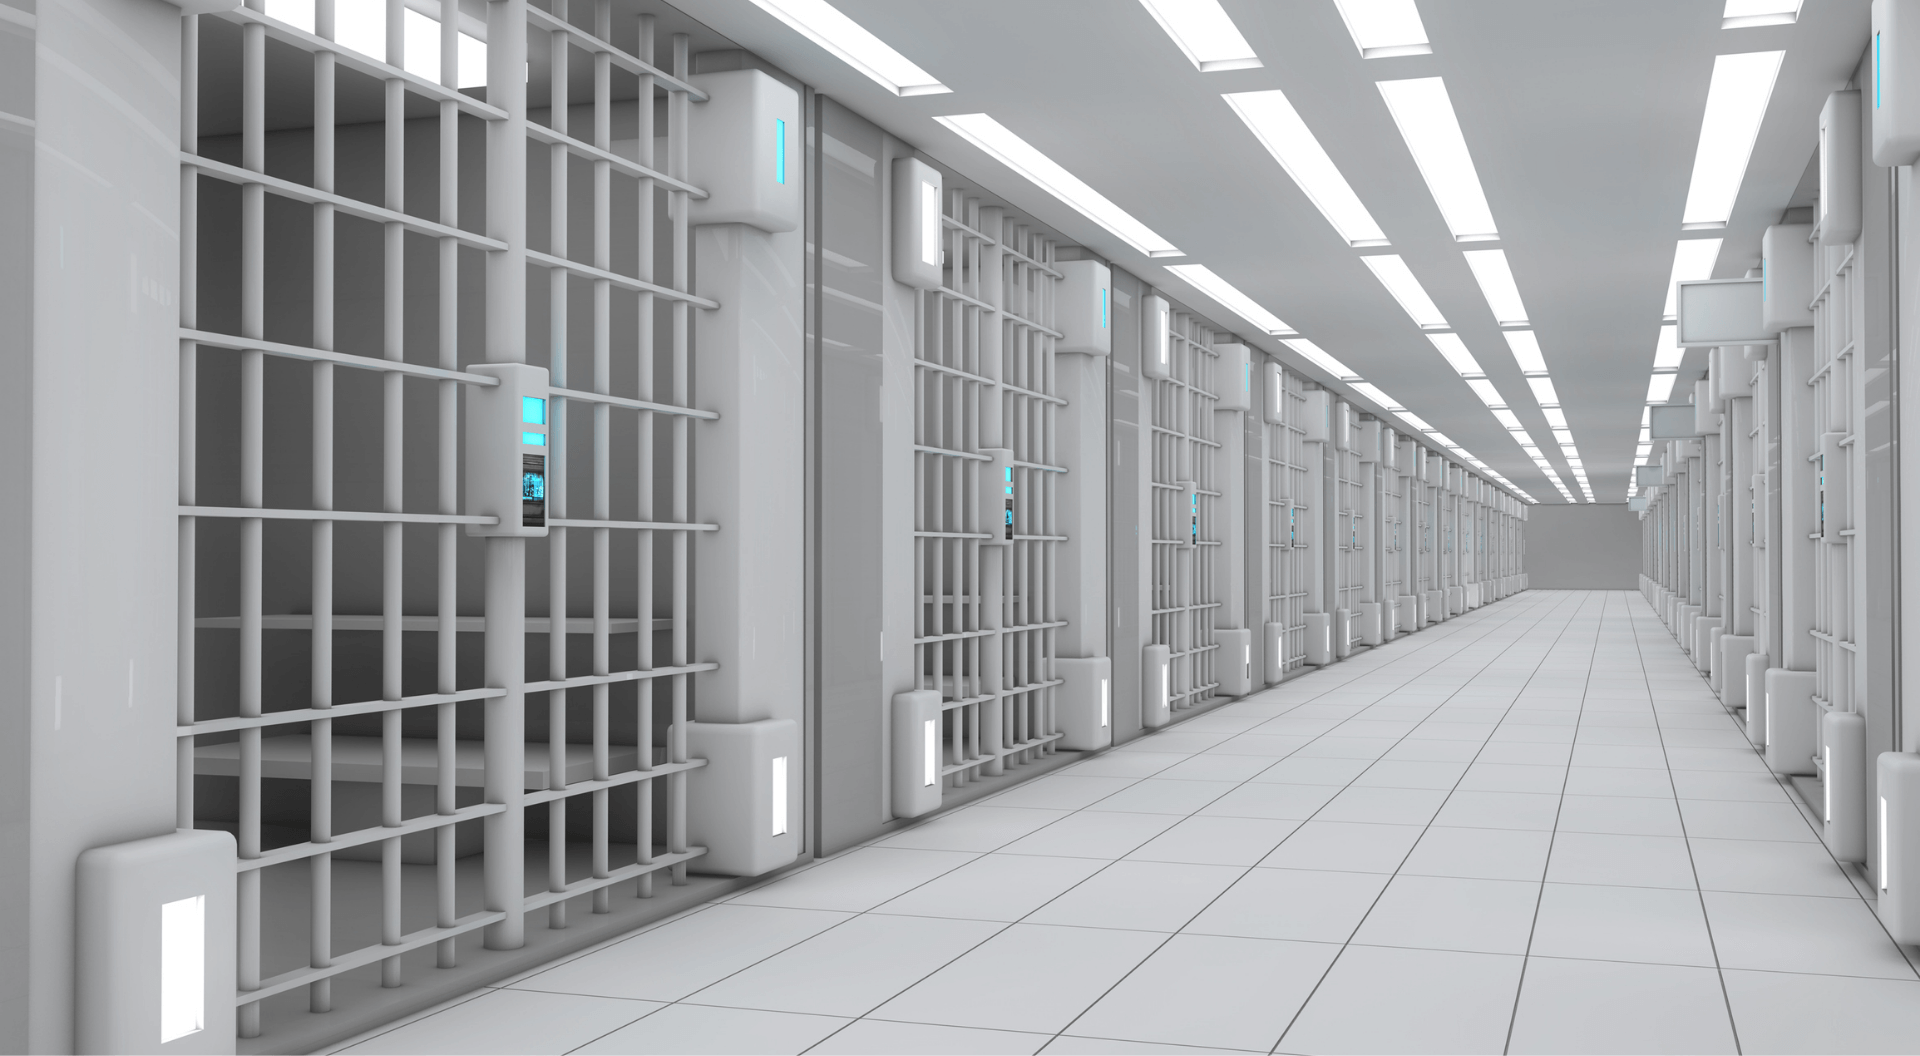 hallway of empty prison cells